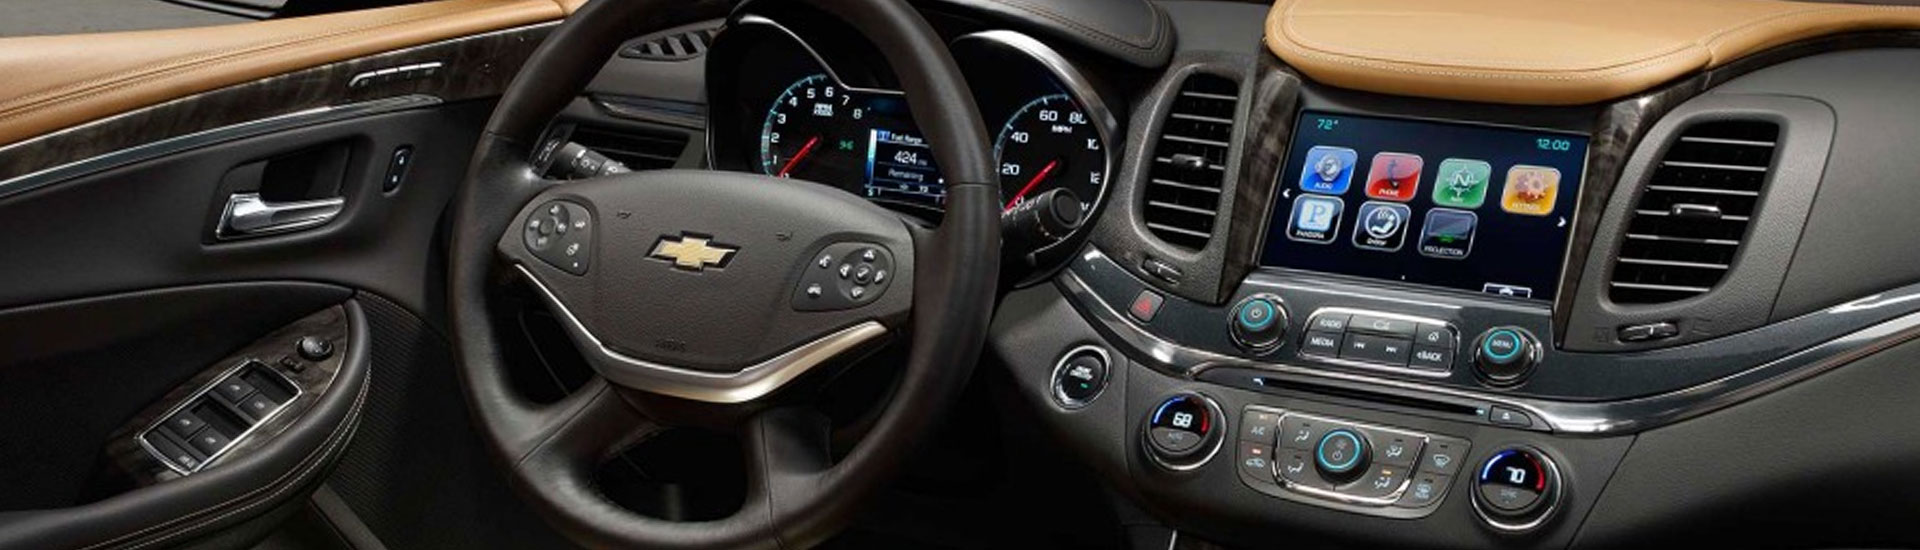 Chevrolet Impala Dash Kits